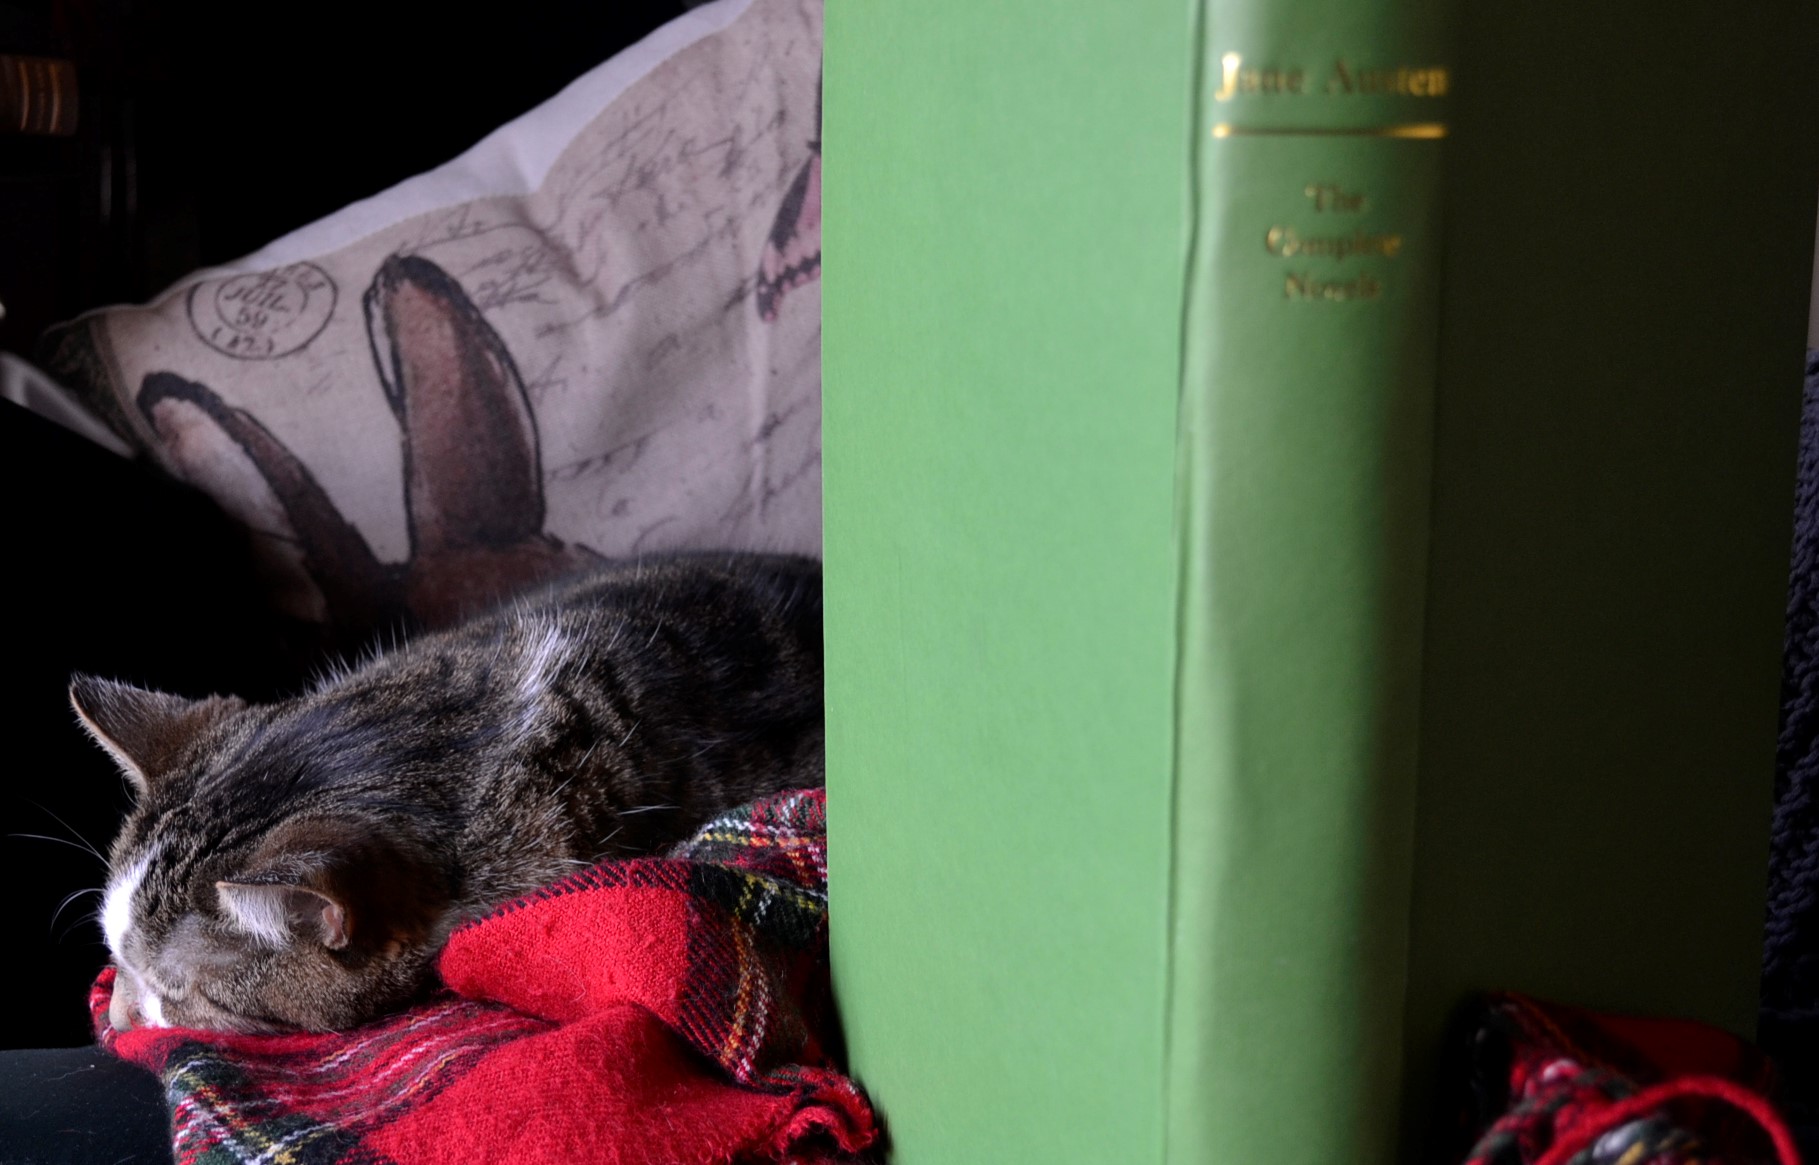 A tabby cat sleeps beside a copy of Pride and Prejudice.